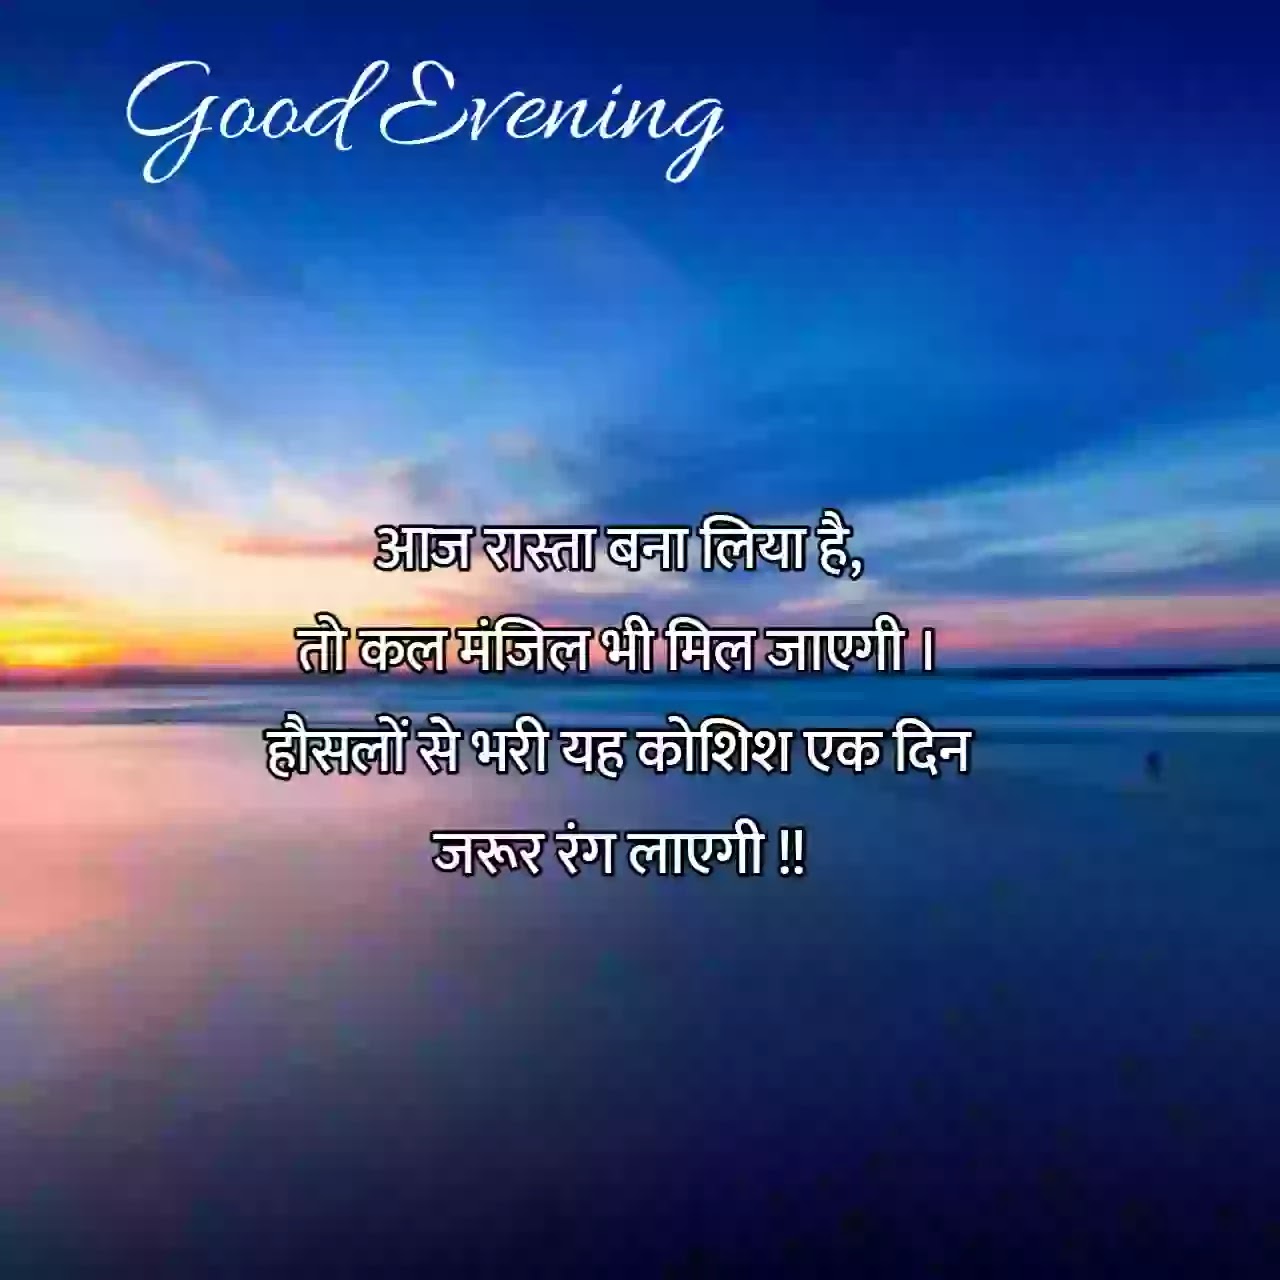 Good Evening Dear Friends! Images • Jyotishyadavofficial ...